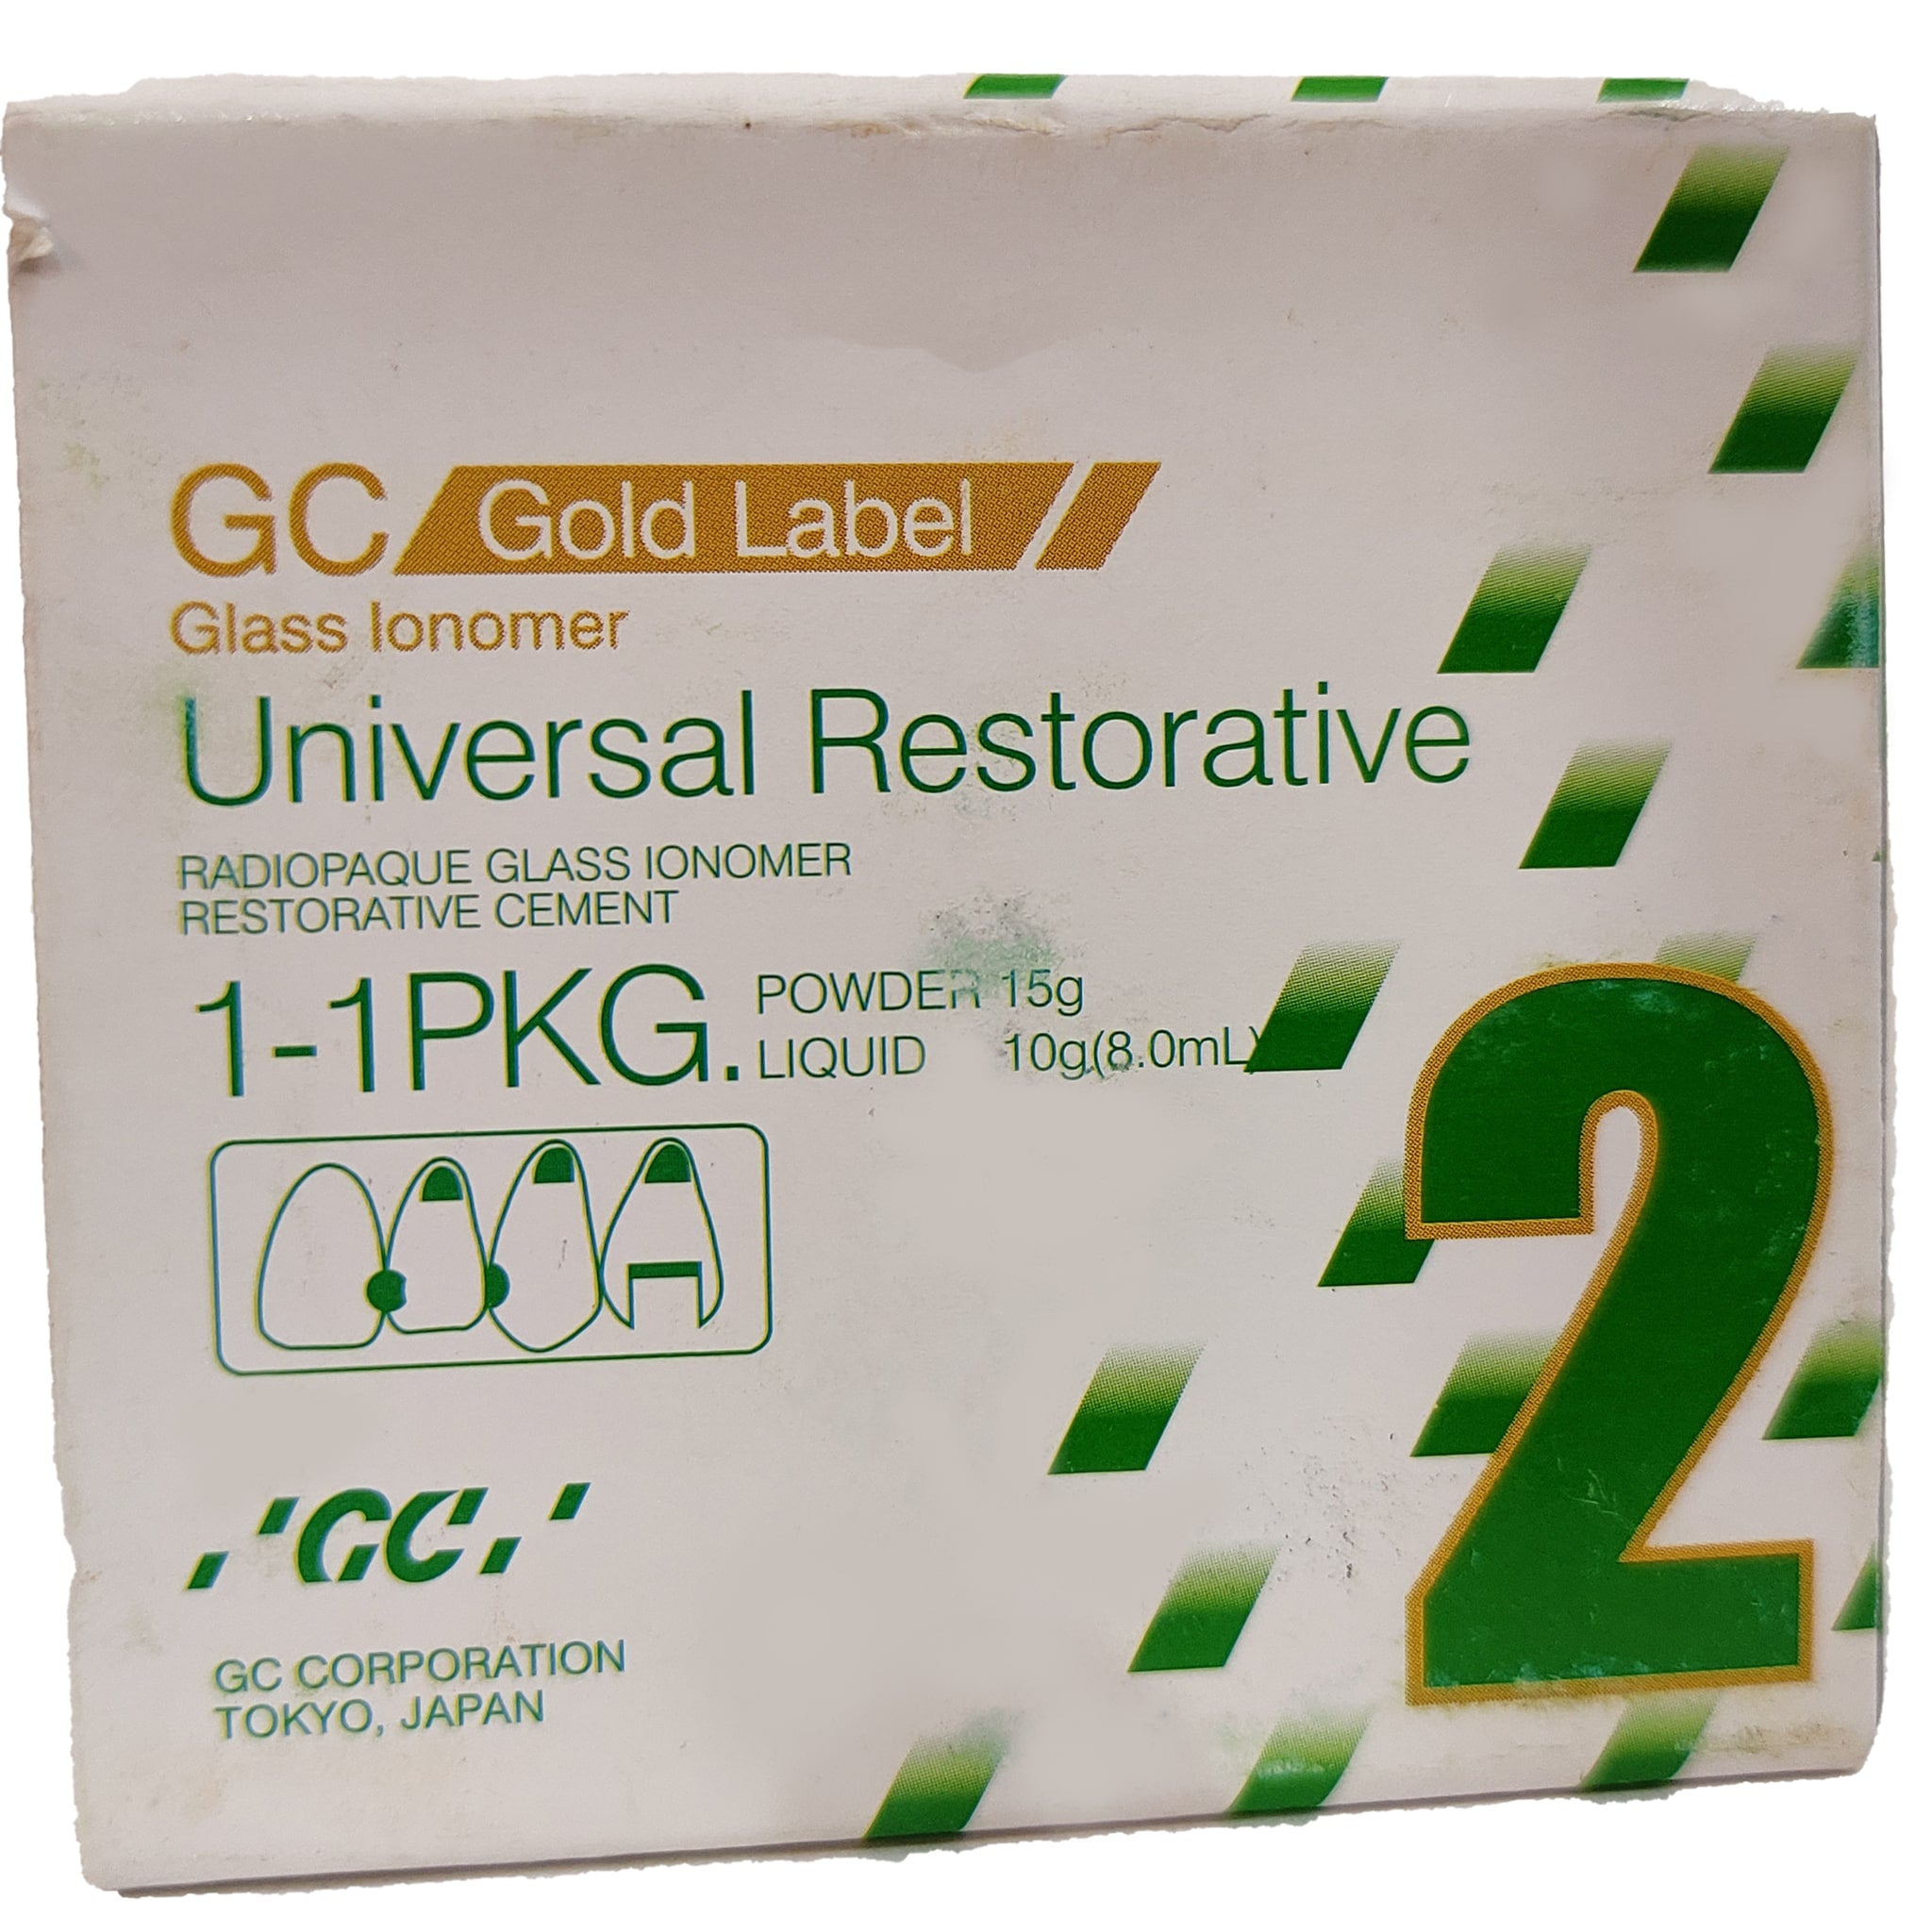 GC Gold Label 2 Glass Ionomer Restorative Cement